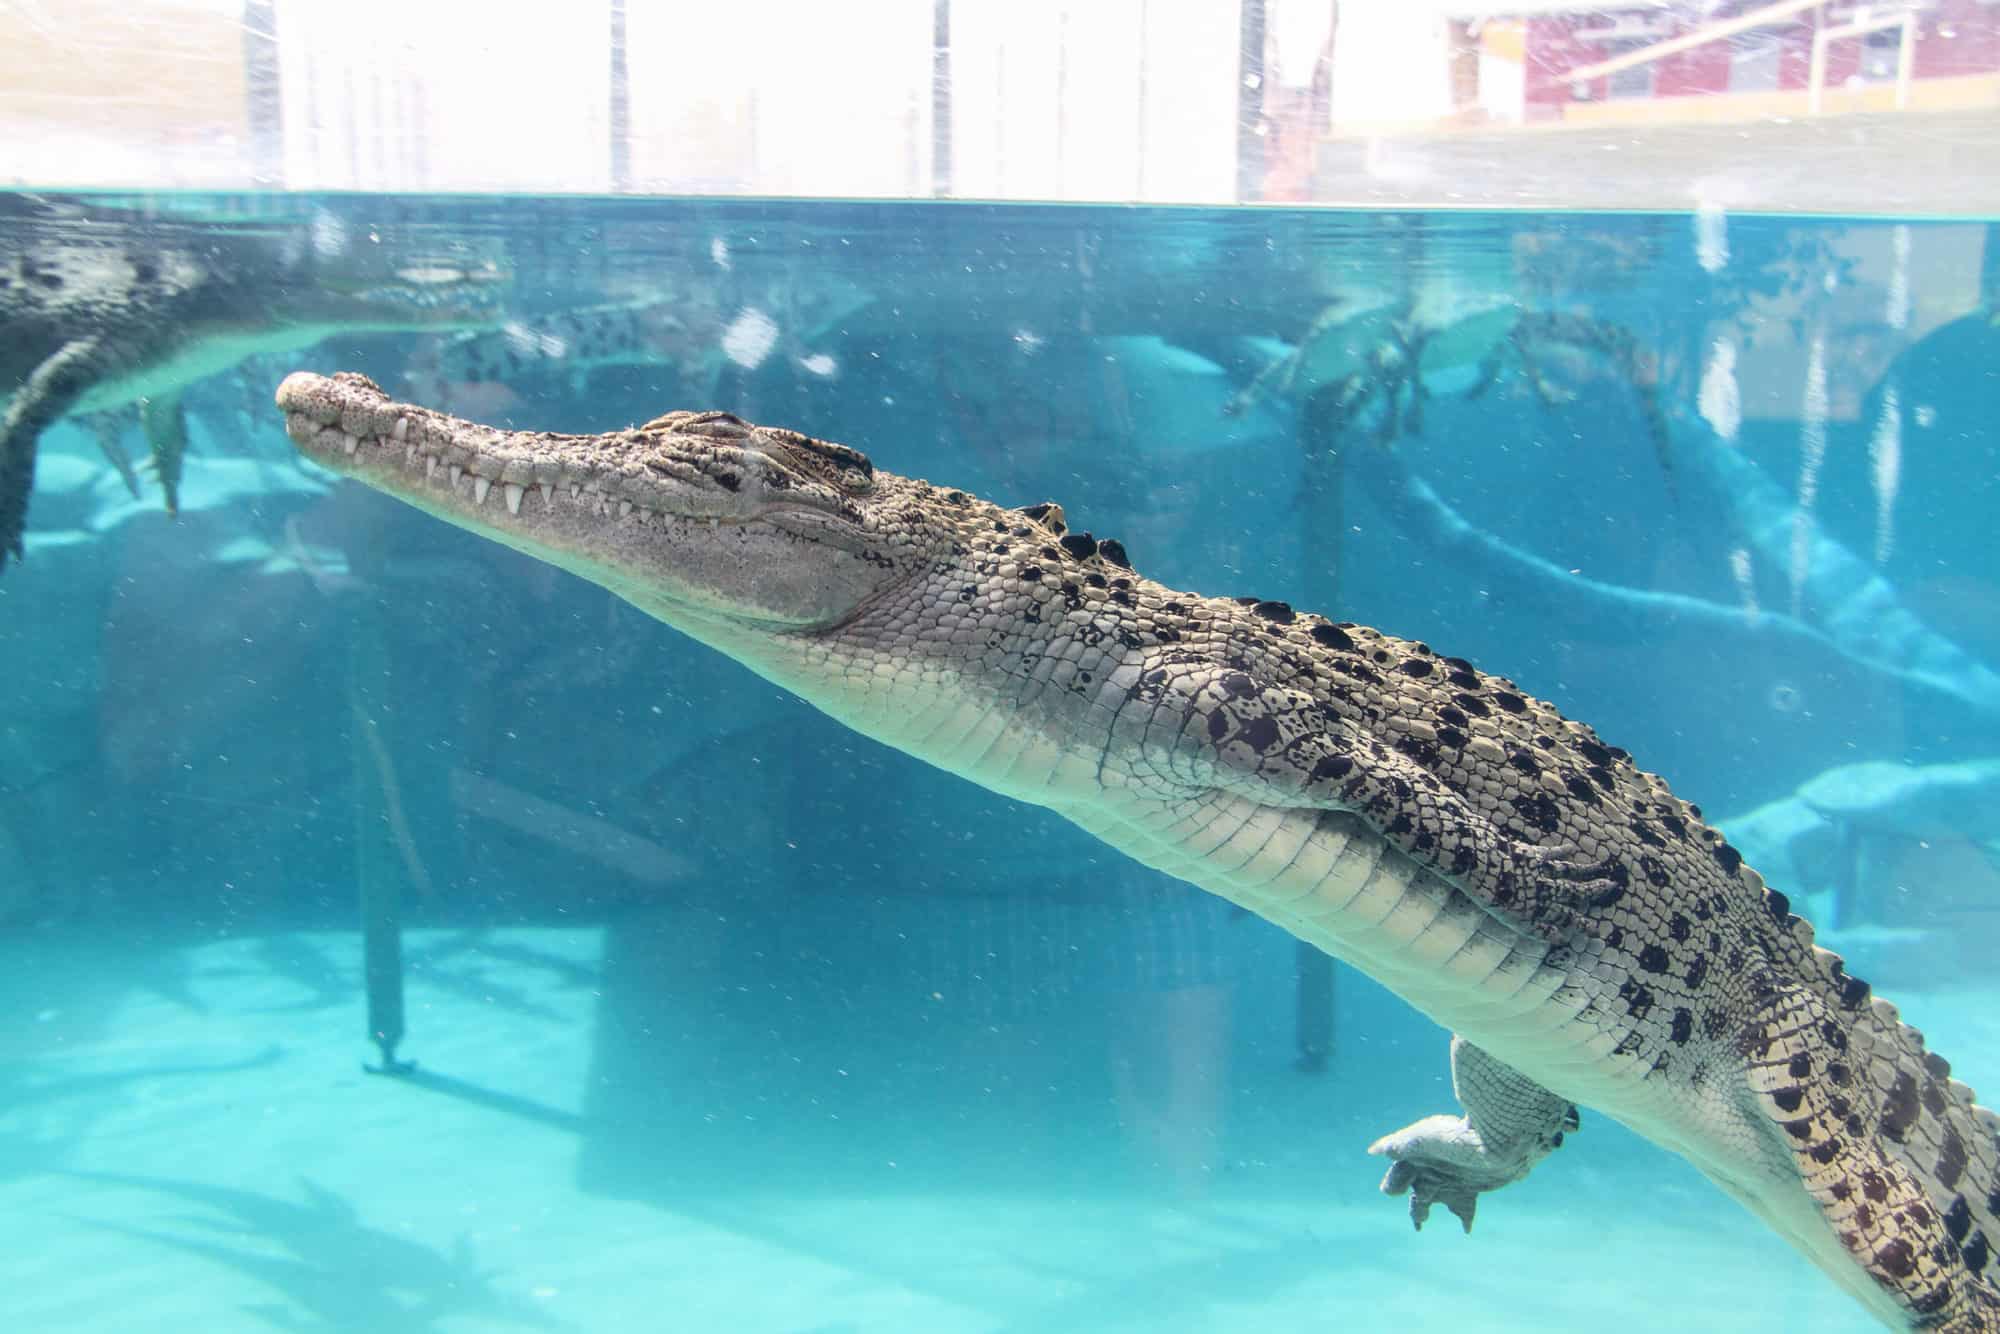 Australia - Northern Territory - Sleeping crocodile in Crocosaurus Cove in the aquarium tank